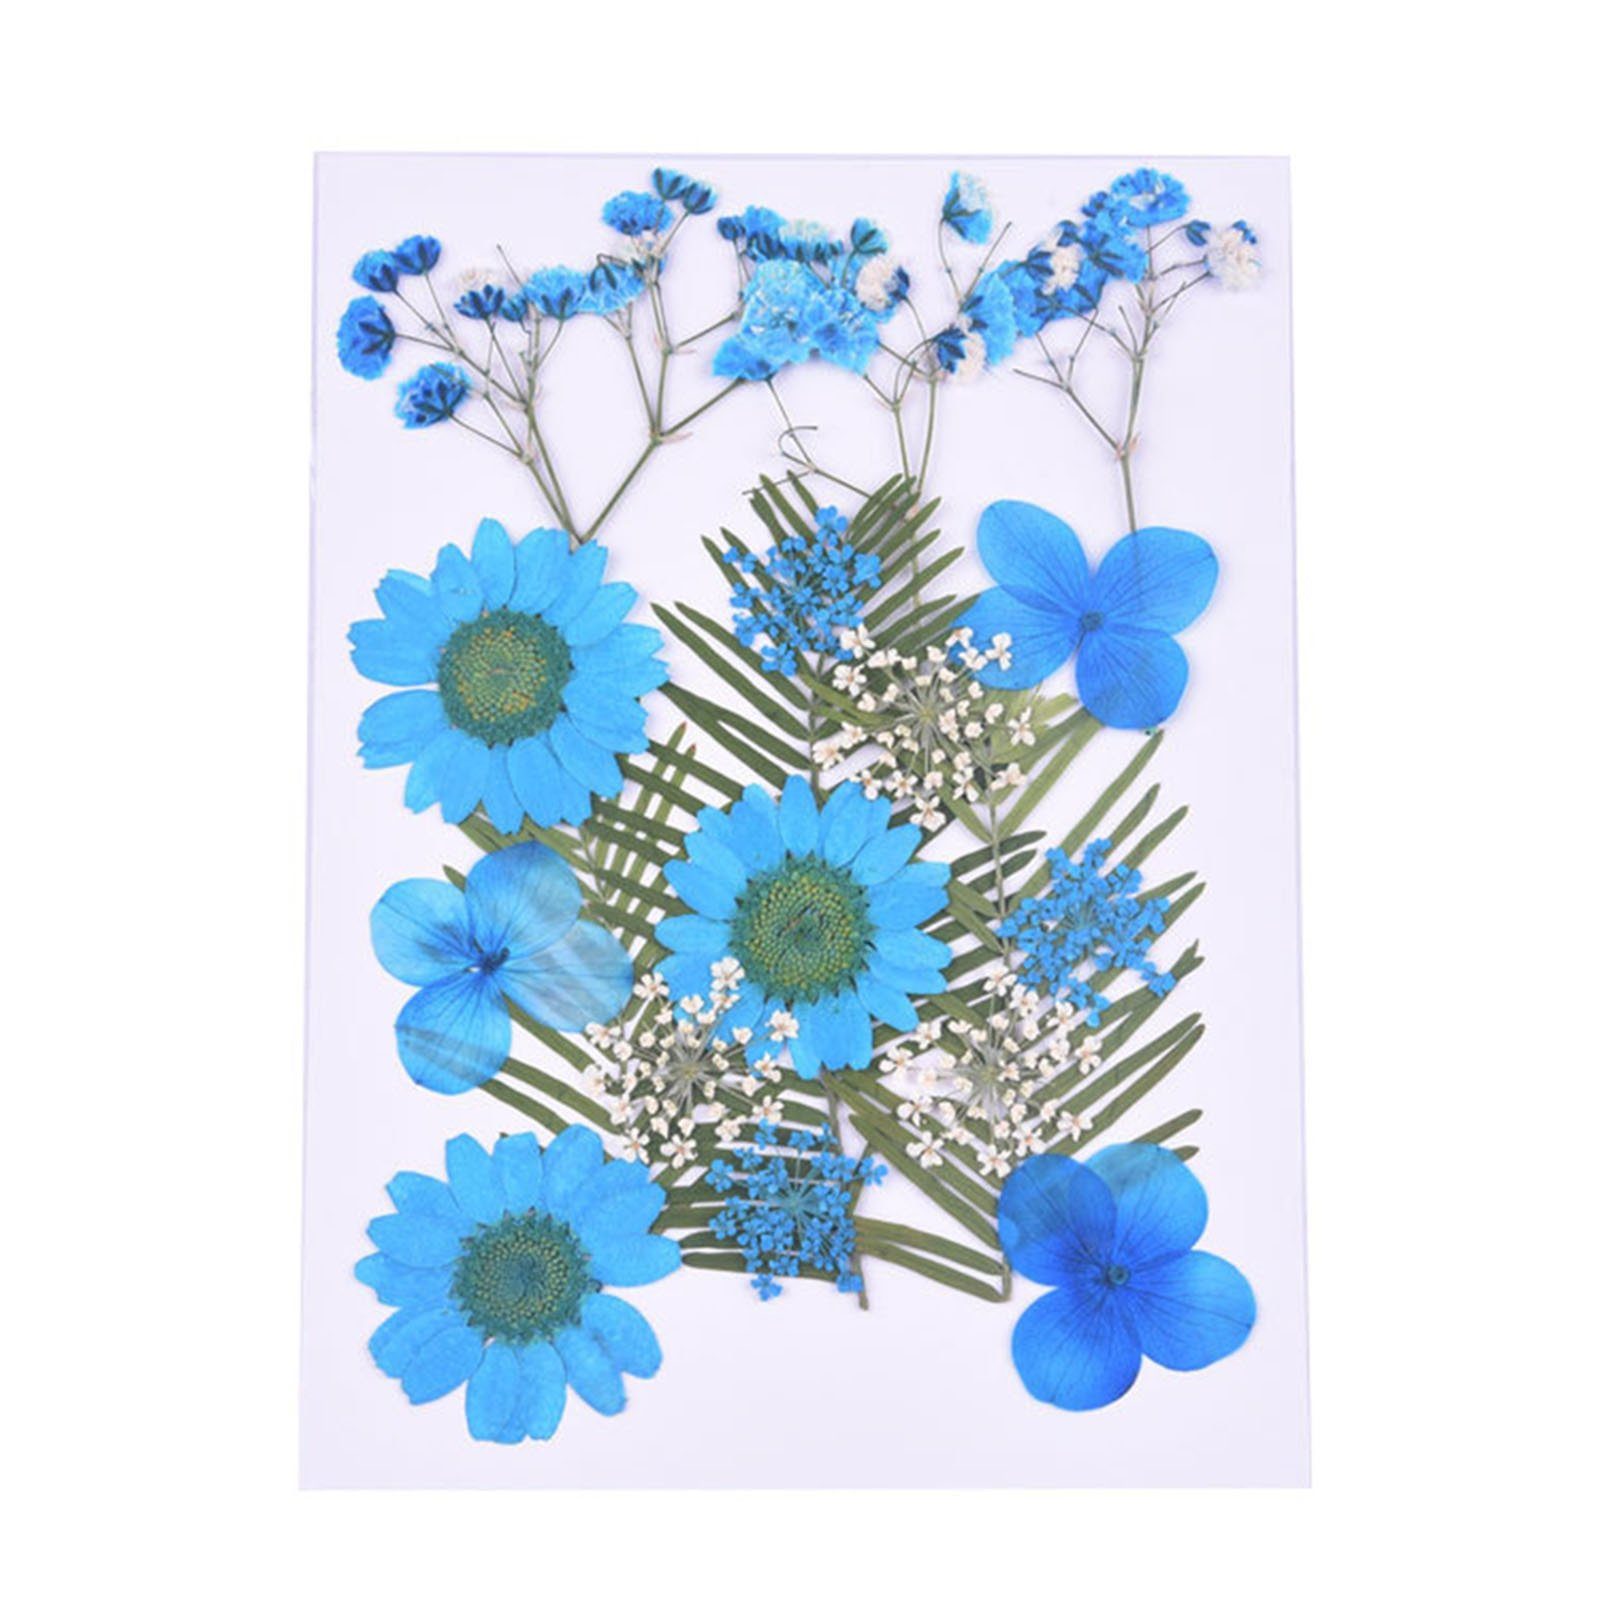 Trockene, Getrocknete Blumen, 6 Kleine Gepresste Blumen, combination Blusmart Trockenblume Scrapbooking,